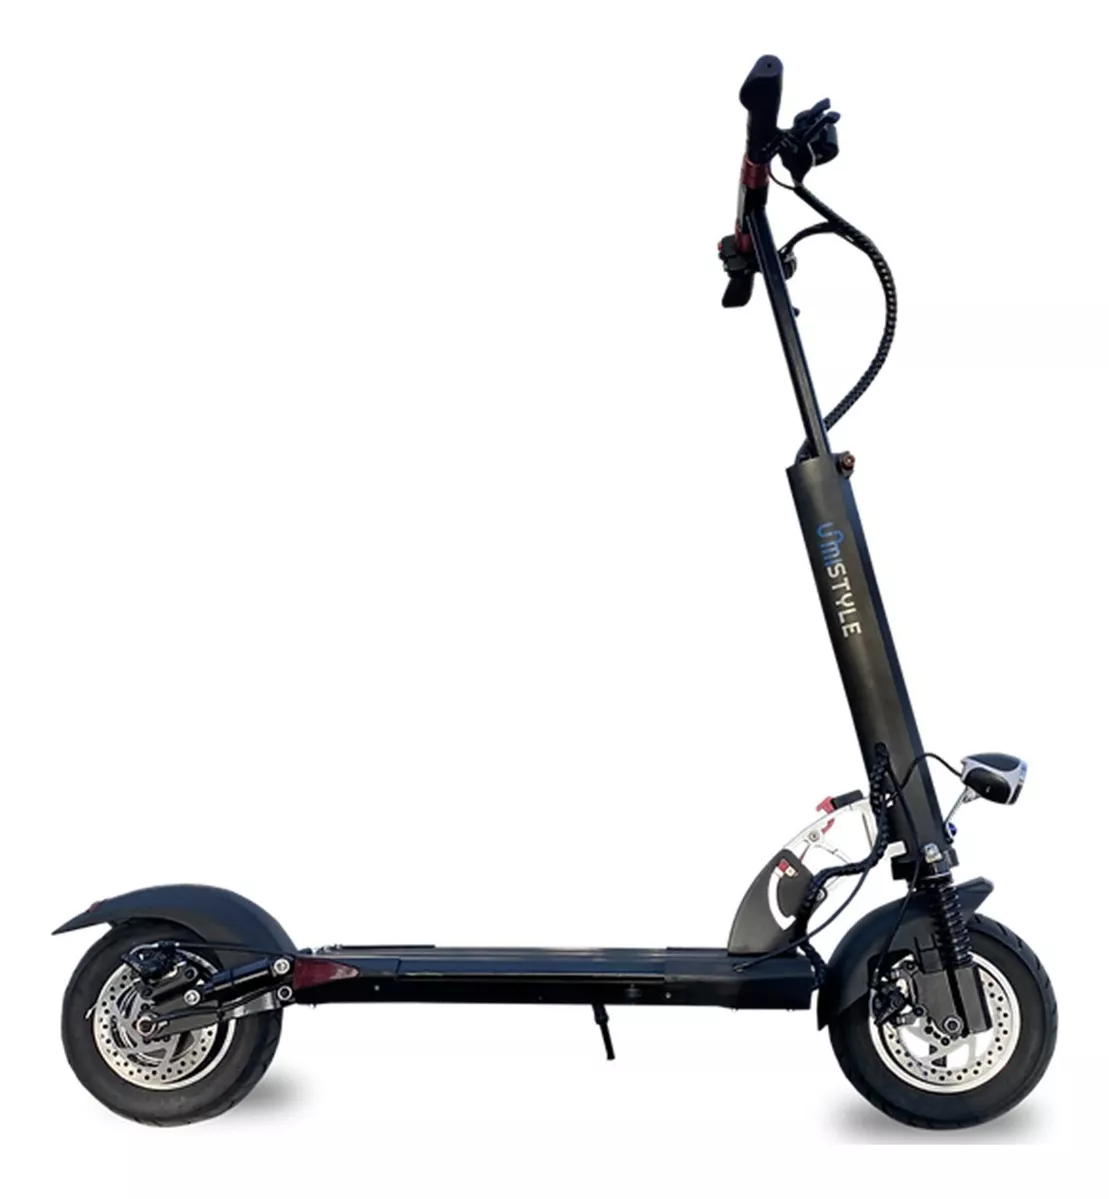 Segunda imagen para búsqueda de monopatin electrico scooter